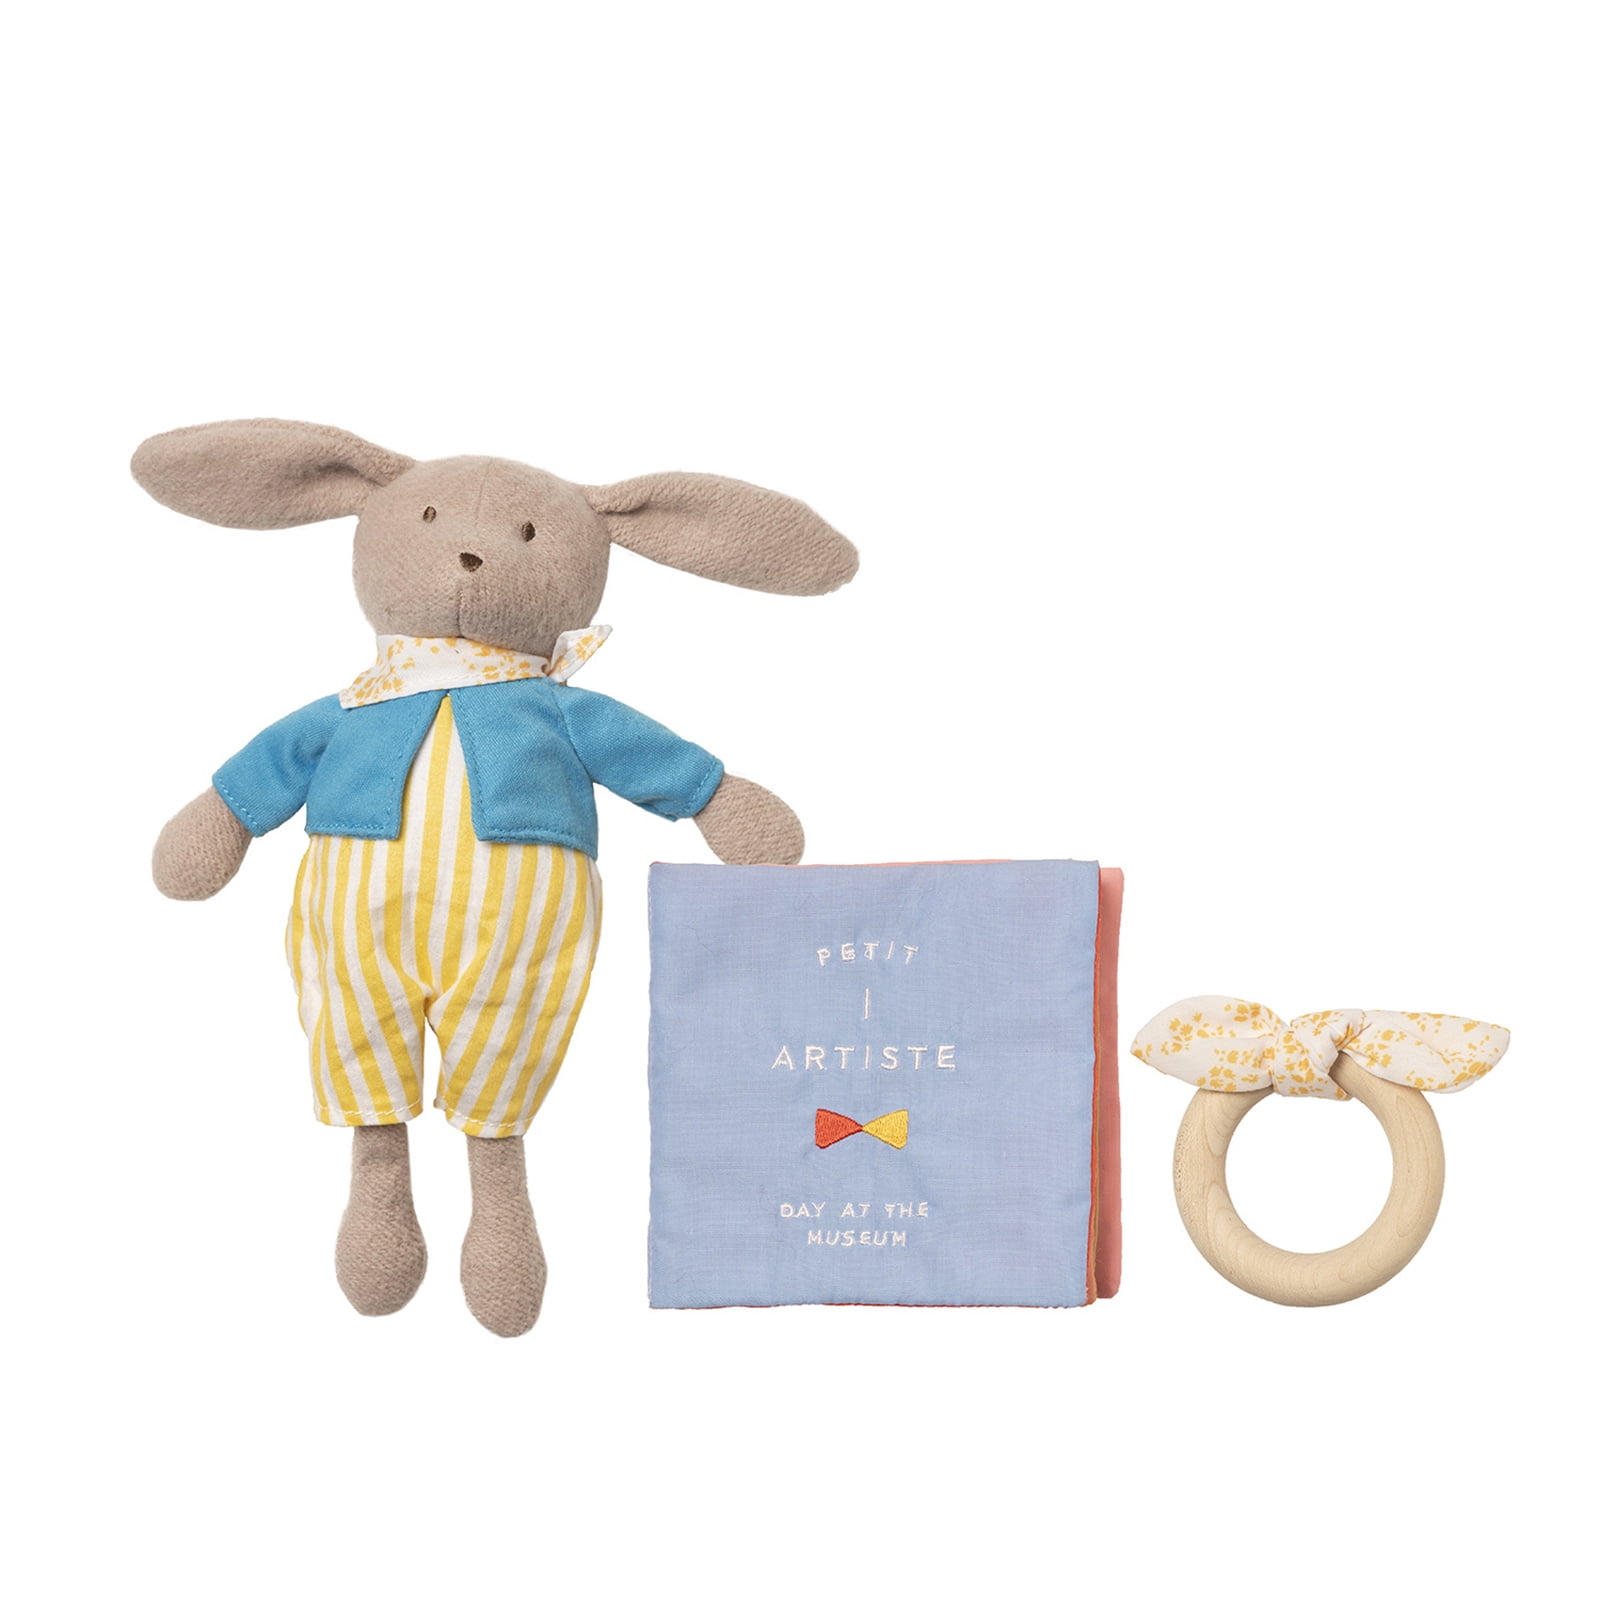 4 Piece Personalised Peter Rabbit Inspired Gift Set ** LASER ENGRAVED ** 0-6 